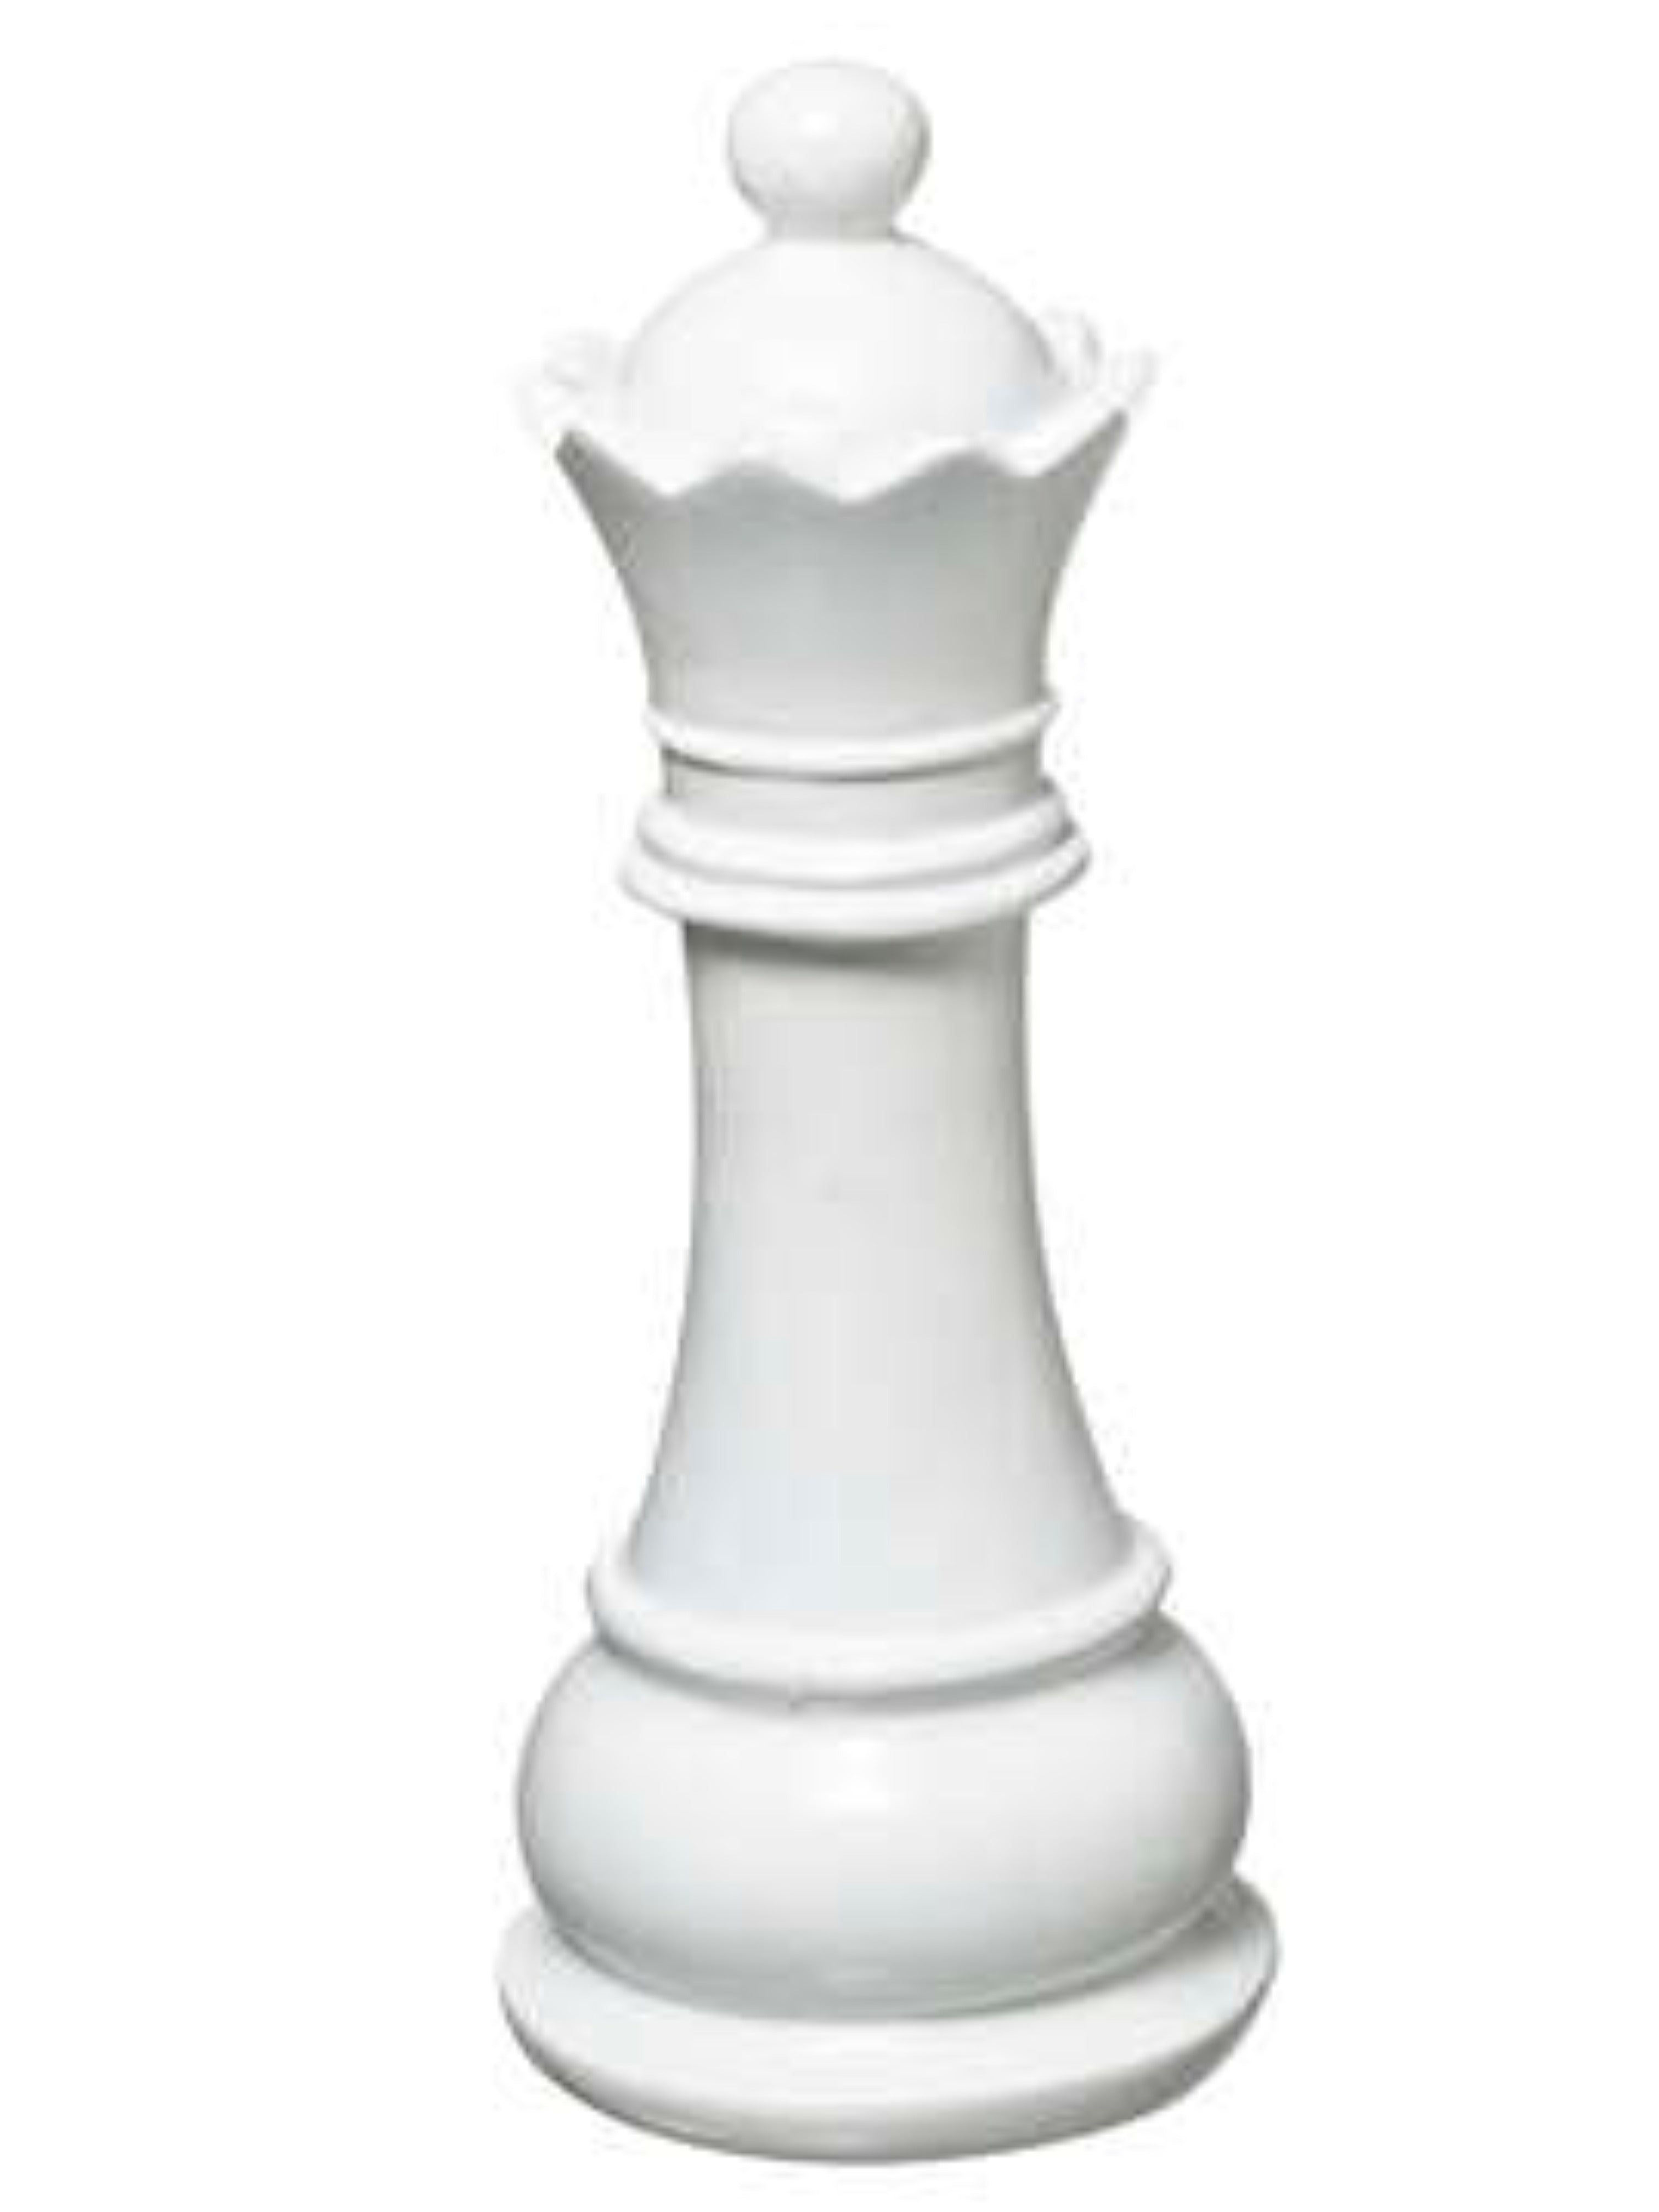 White King Chess Piece Ornament